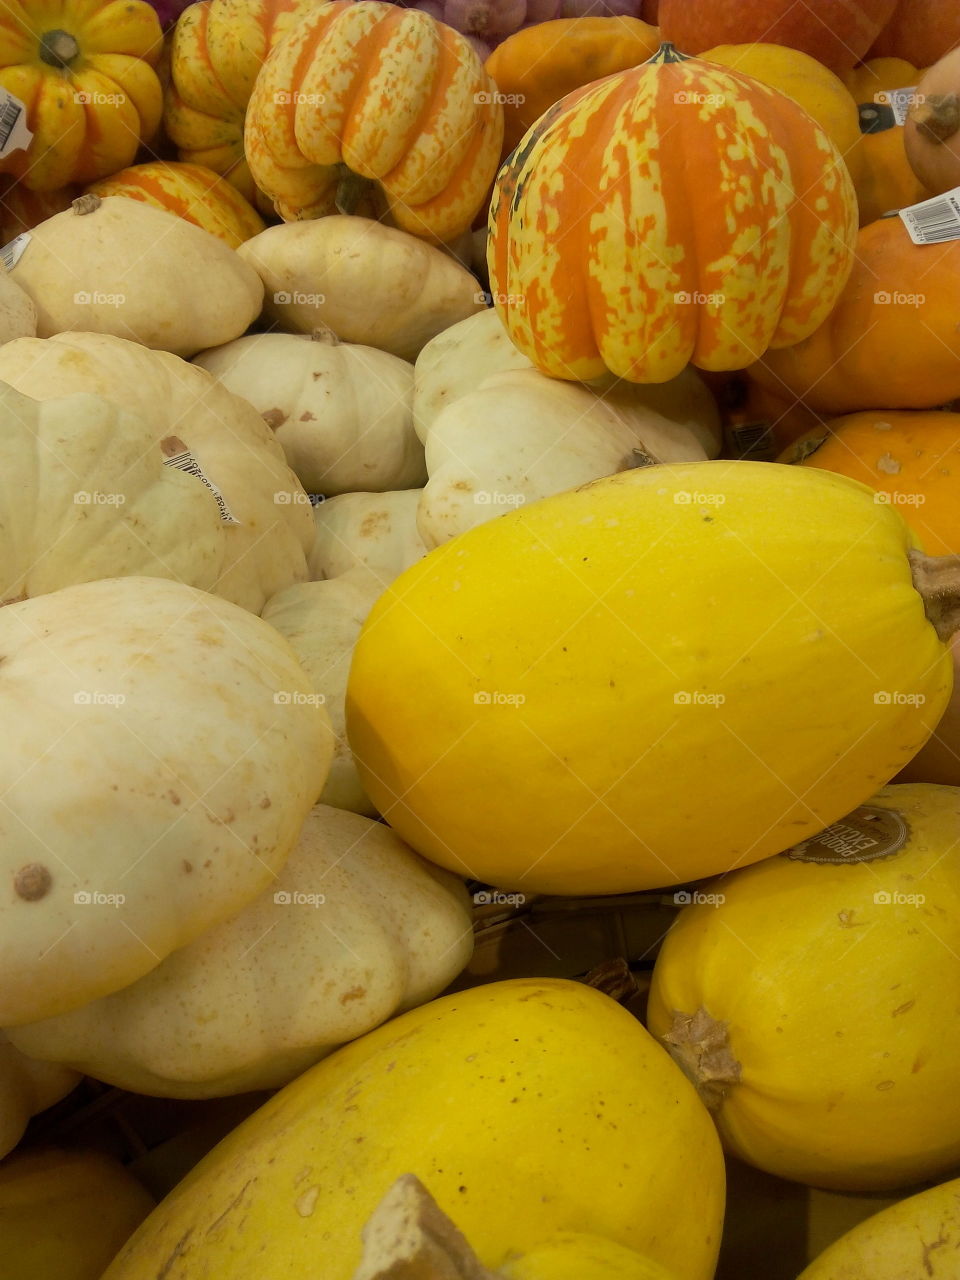 Fall vegetables - October and november harvest - Thanksgiving